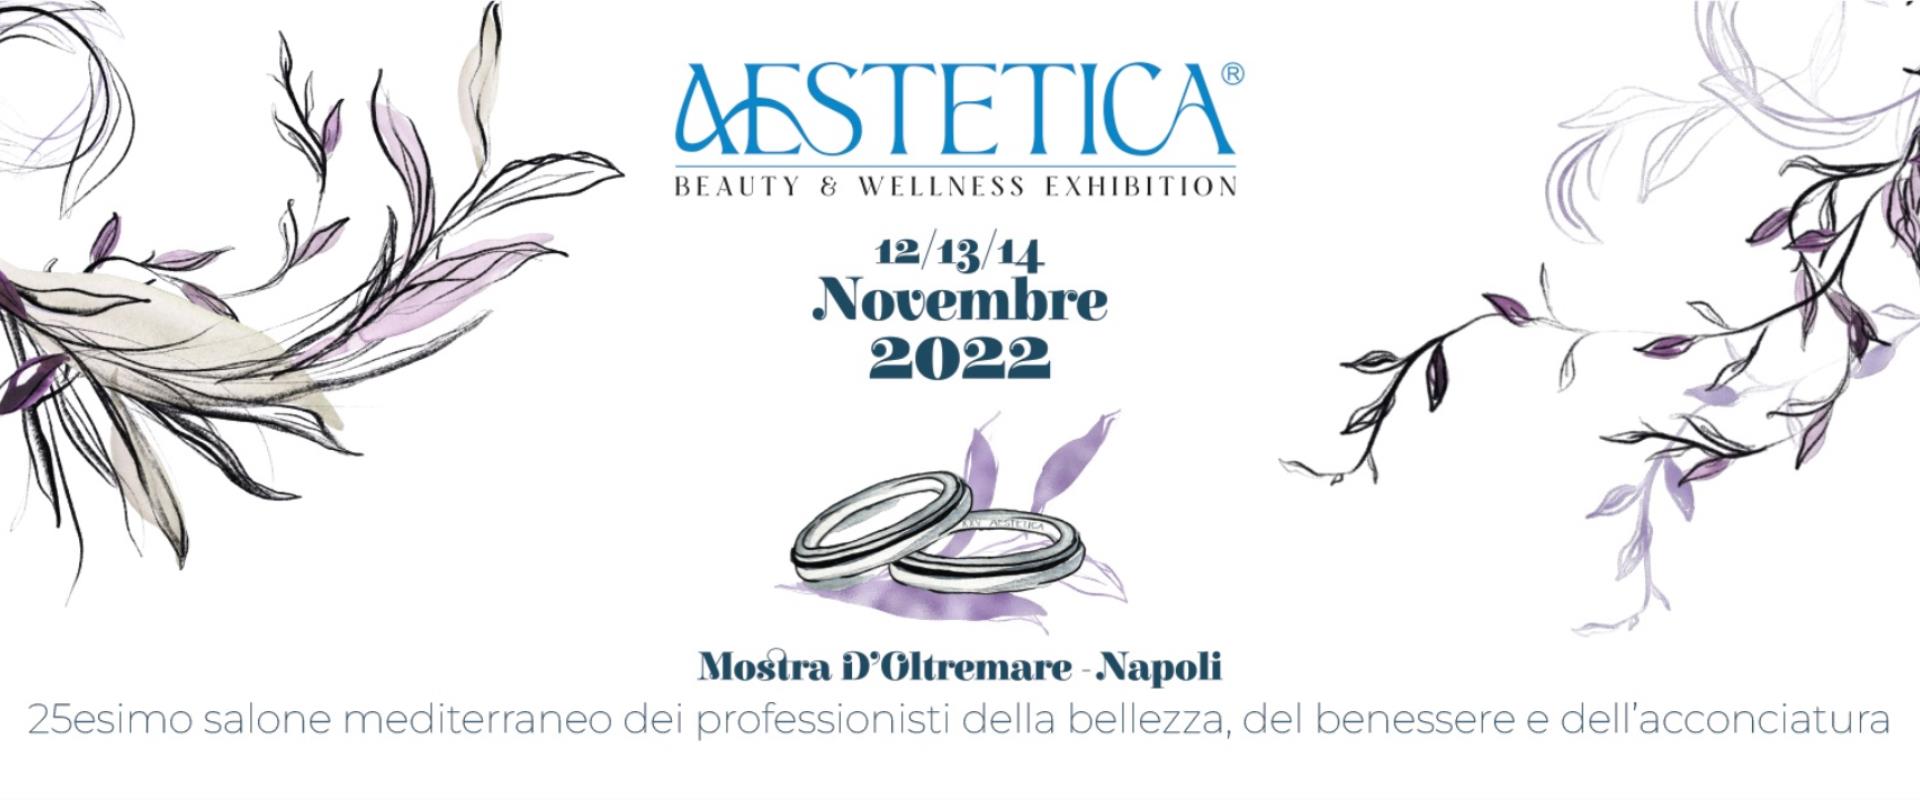 Aestetica Beauty & Wellness Exhibition